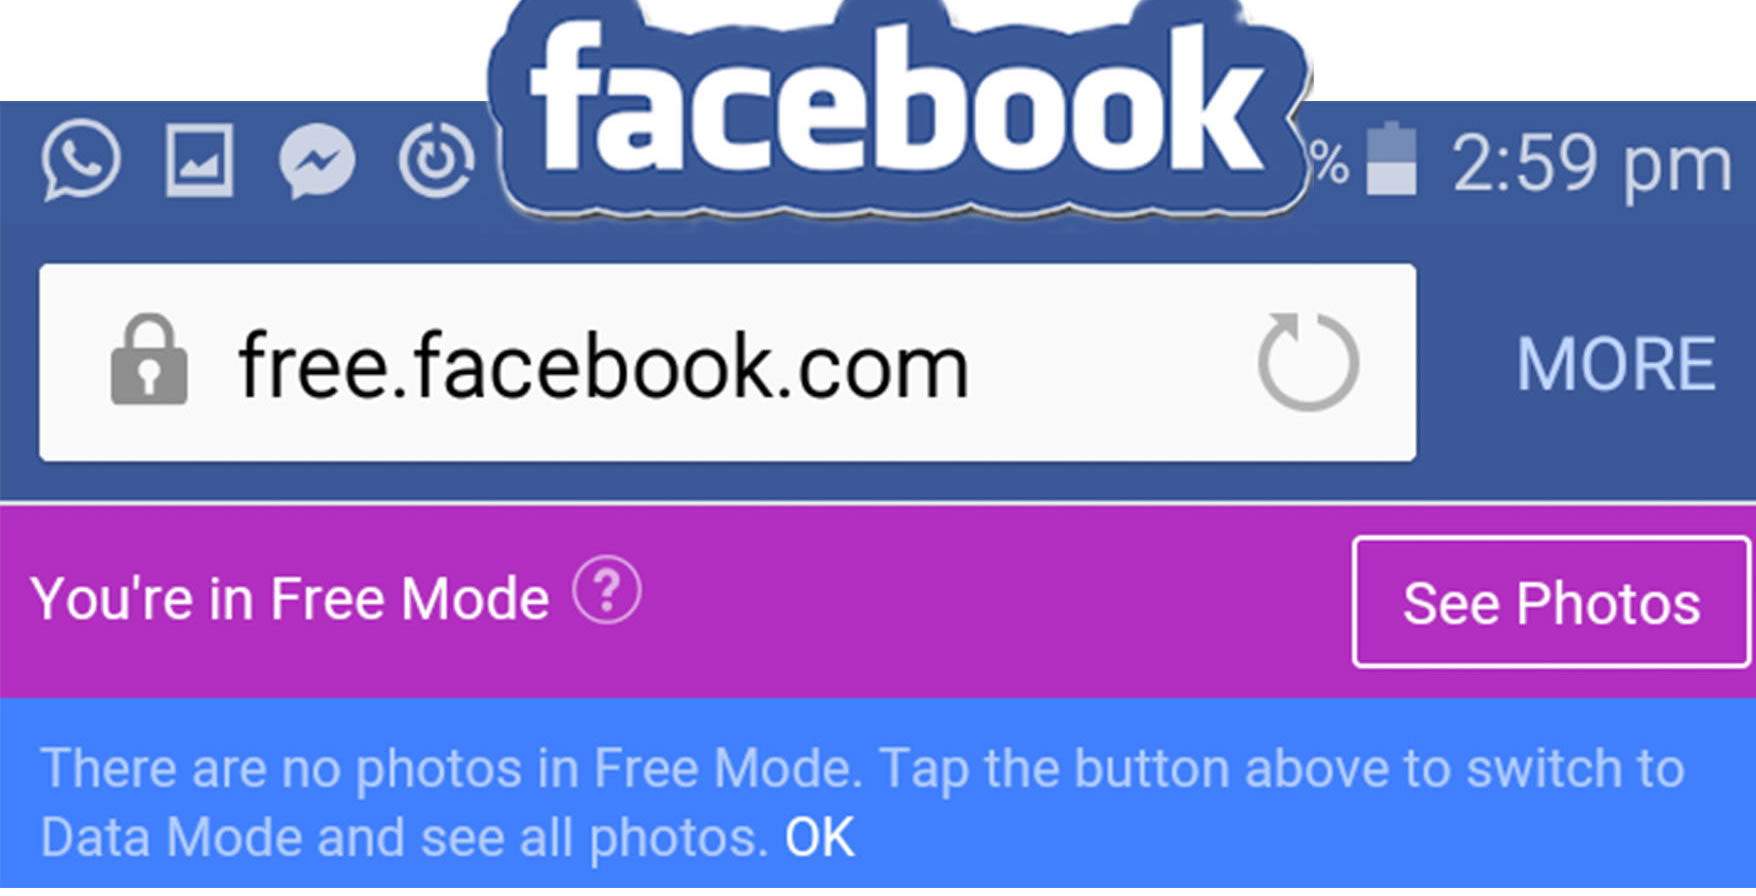 Facebook Lite Login - Facebook Free Mode Settings